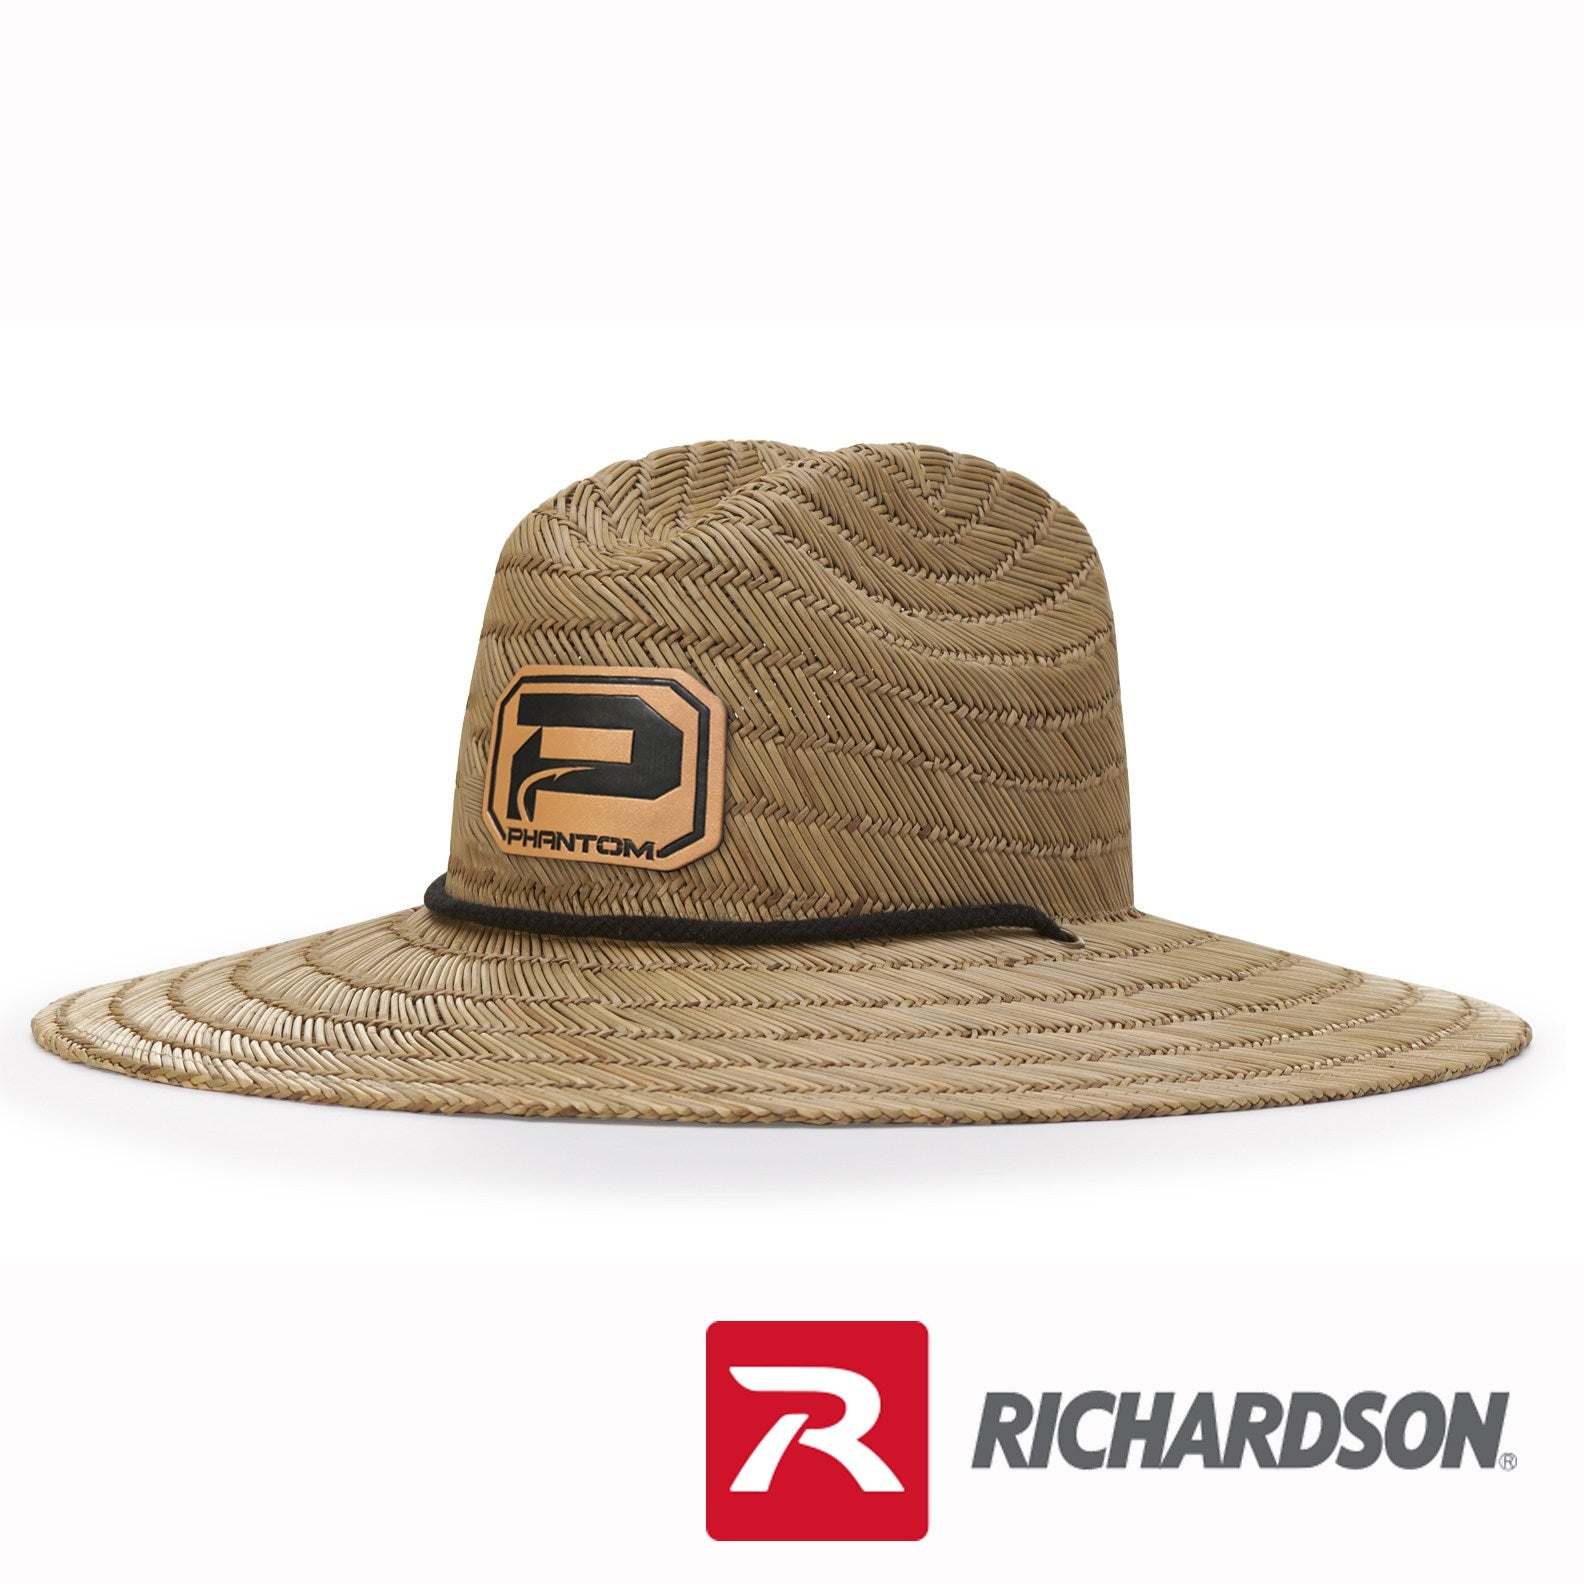 Richardson Leather Patch Straw Hat